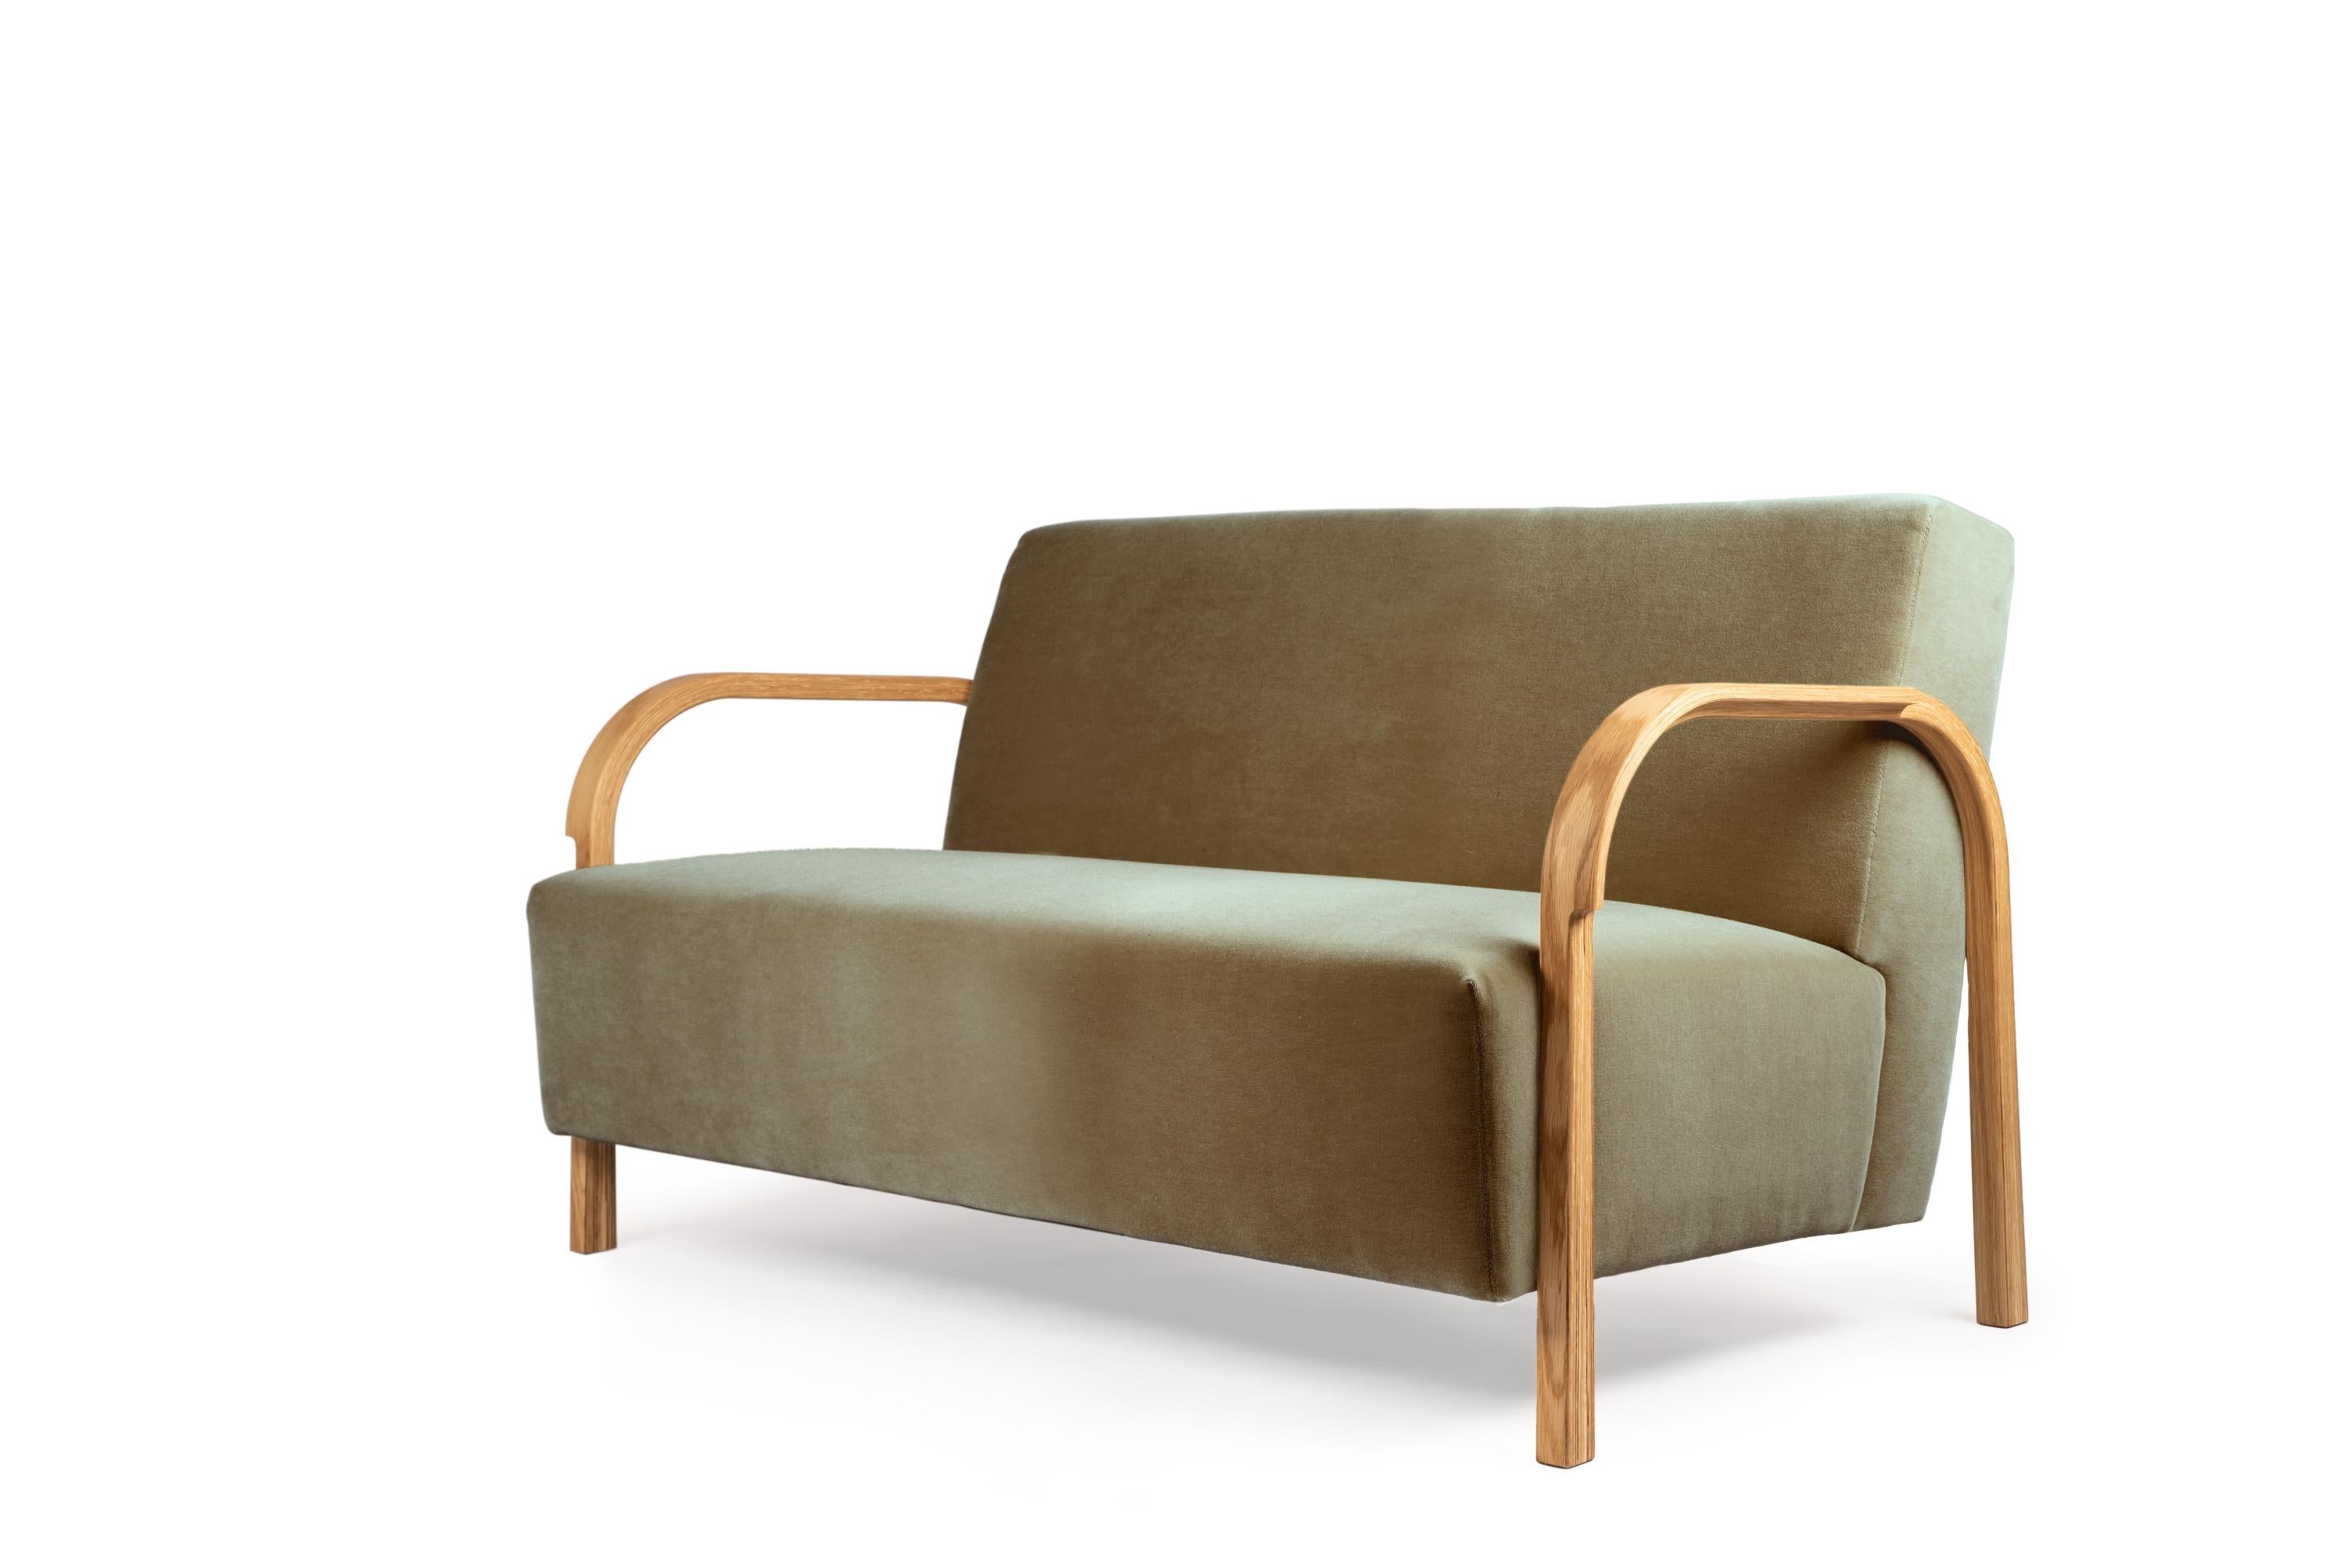 DAW/Mohair & Mcnutt ARCH 2 seater sofa by Mazo Design
Dimensions: W 128 x D 79 x H 76 cm
Materials: Oak, textile
Also available: 2 seater configuration, ROMO/Linara, DAW/Royal, KVADRAT/Remix, KVADRAT/Hallingdal & Fiord, BUTE/Storr, DEDAR/Linear,